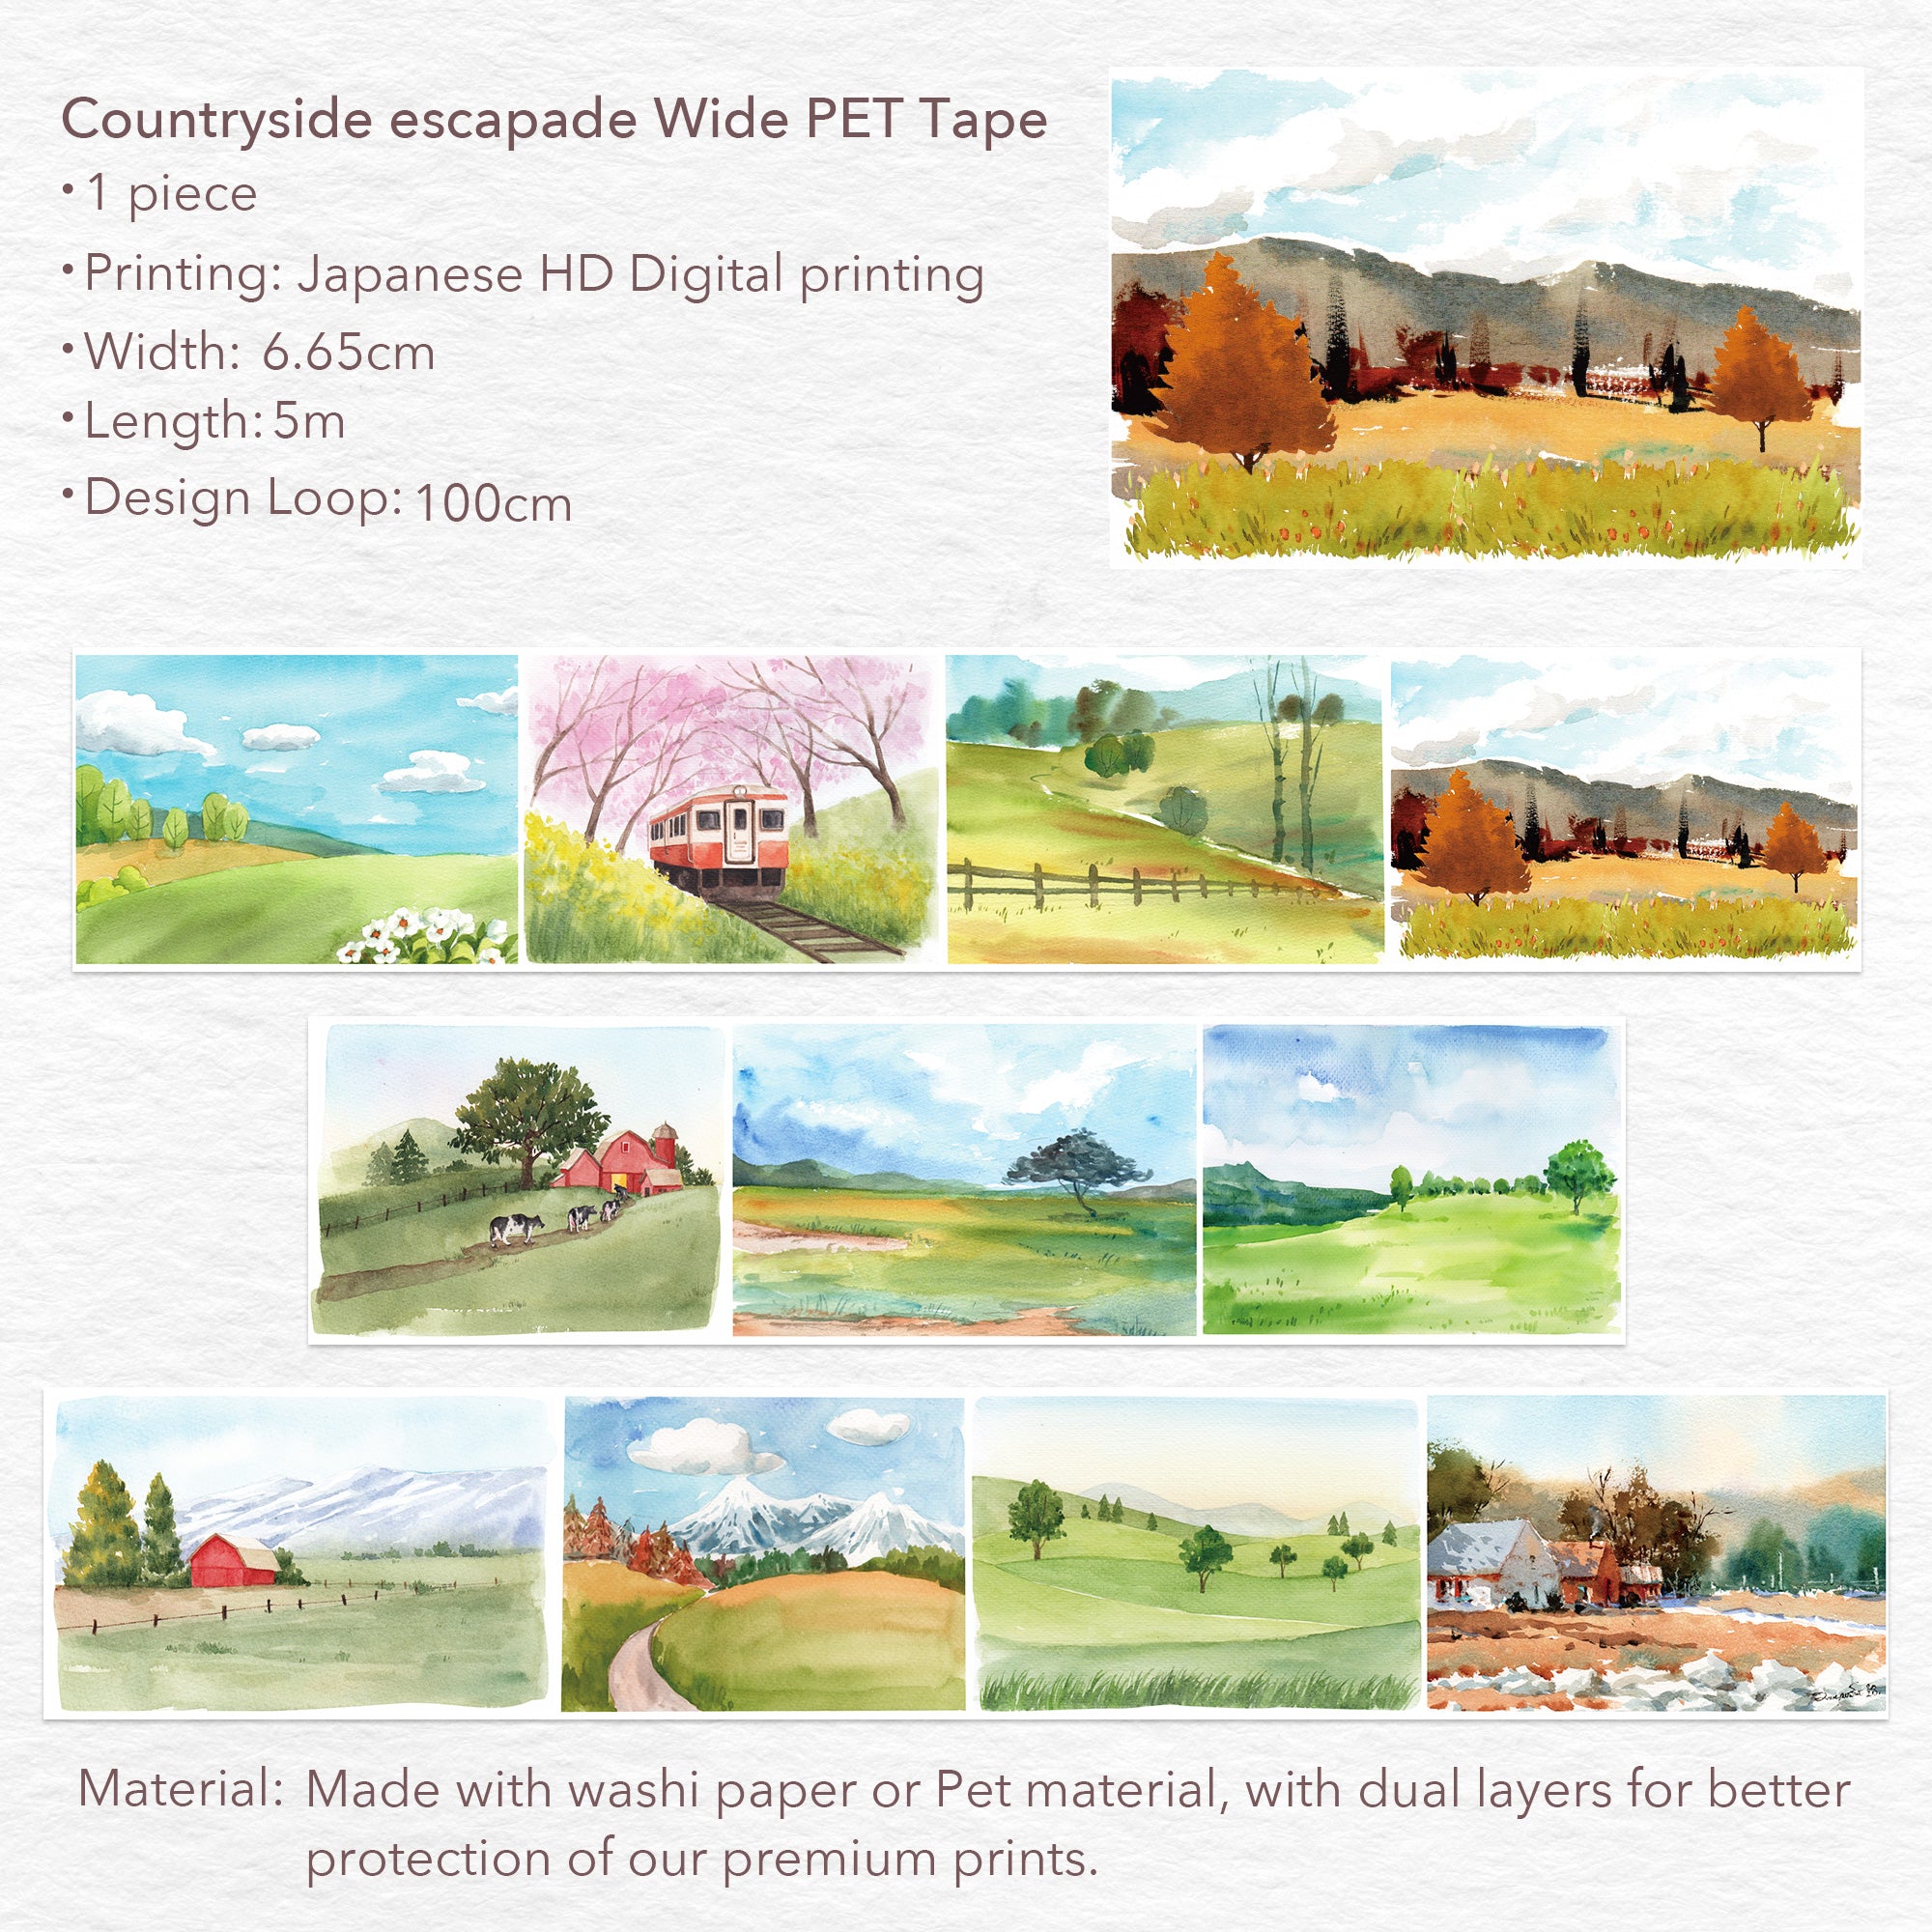 Countryside Escapade Wide Washi / PET Tape